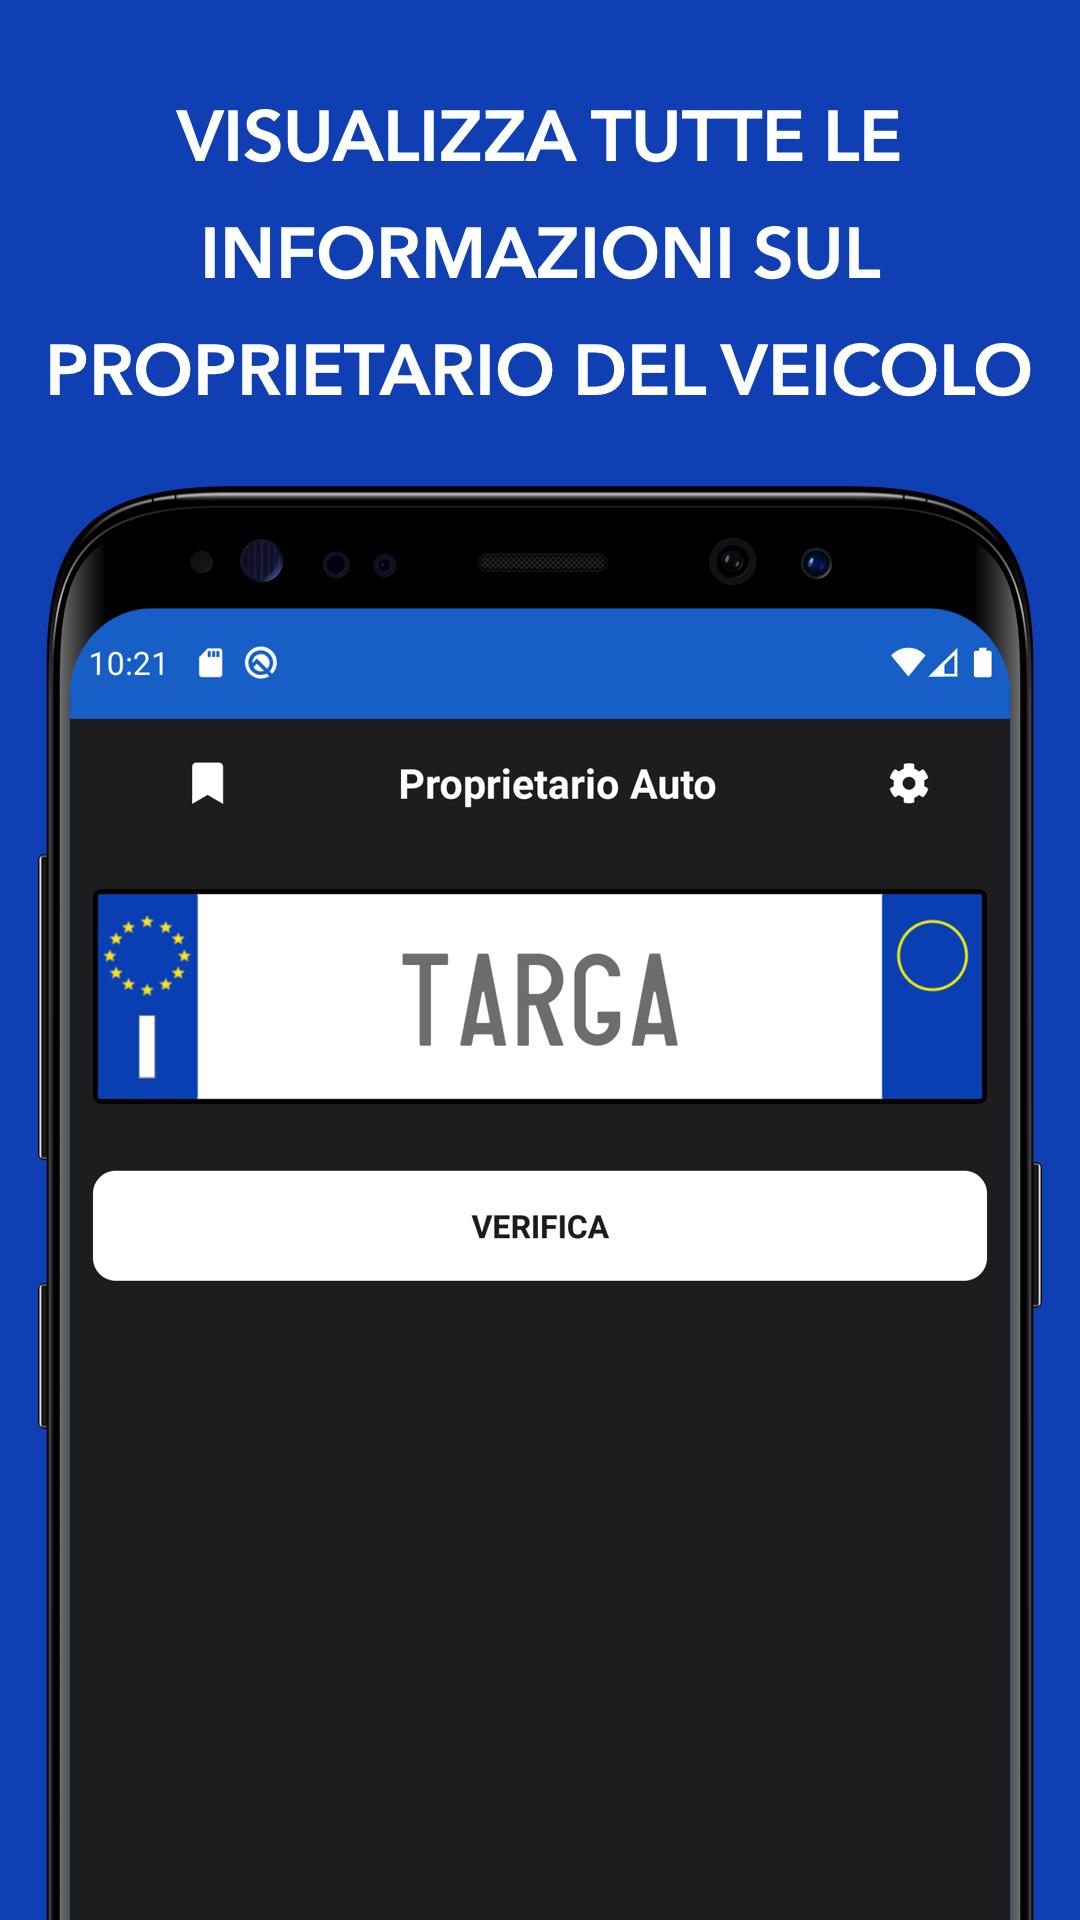 Proprietario Auto Targa Info - Visura Auto for Android - APK Download